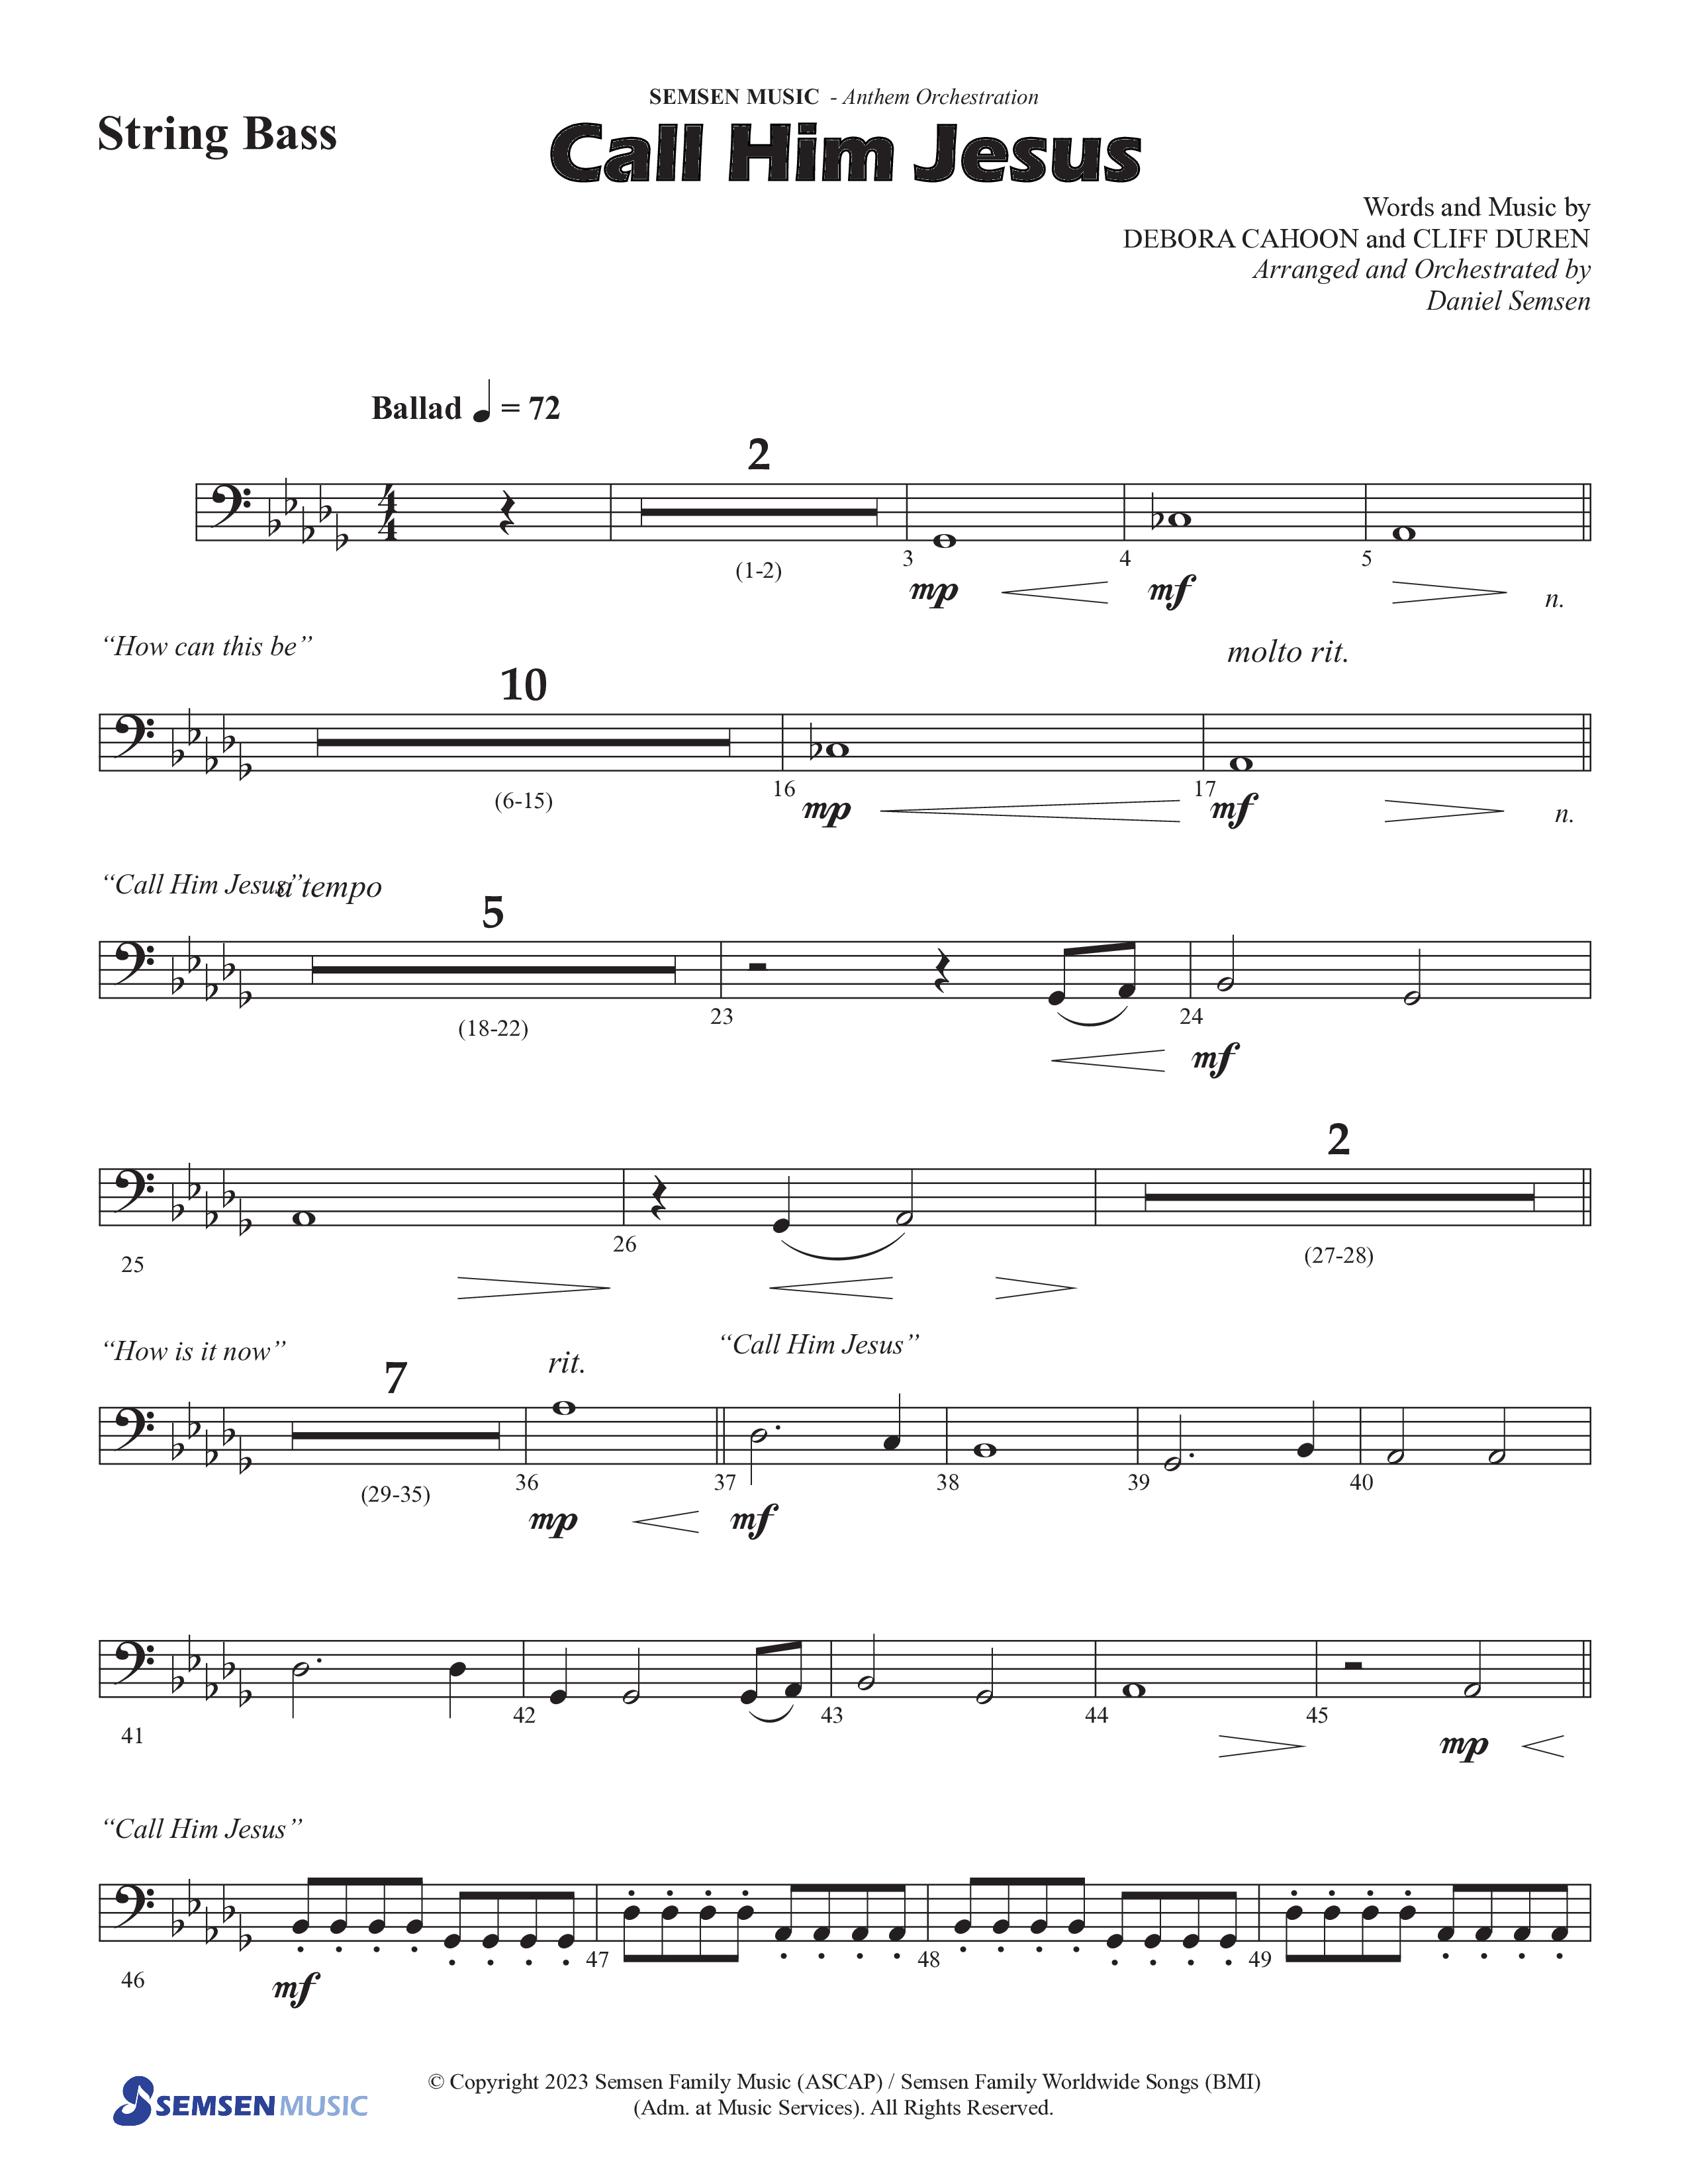 Call Him Jesus (Choral Anthem SATB) String Bass (Semsen Music / Arr. Daniel Semsen)